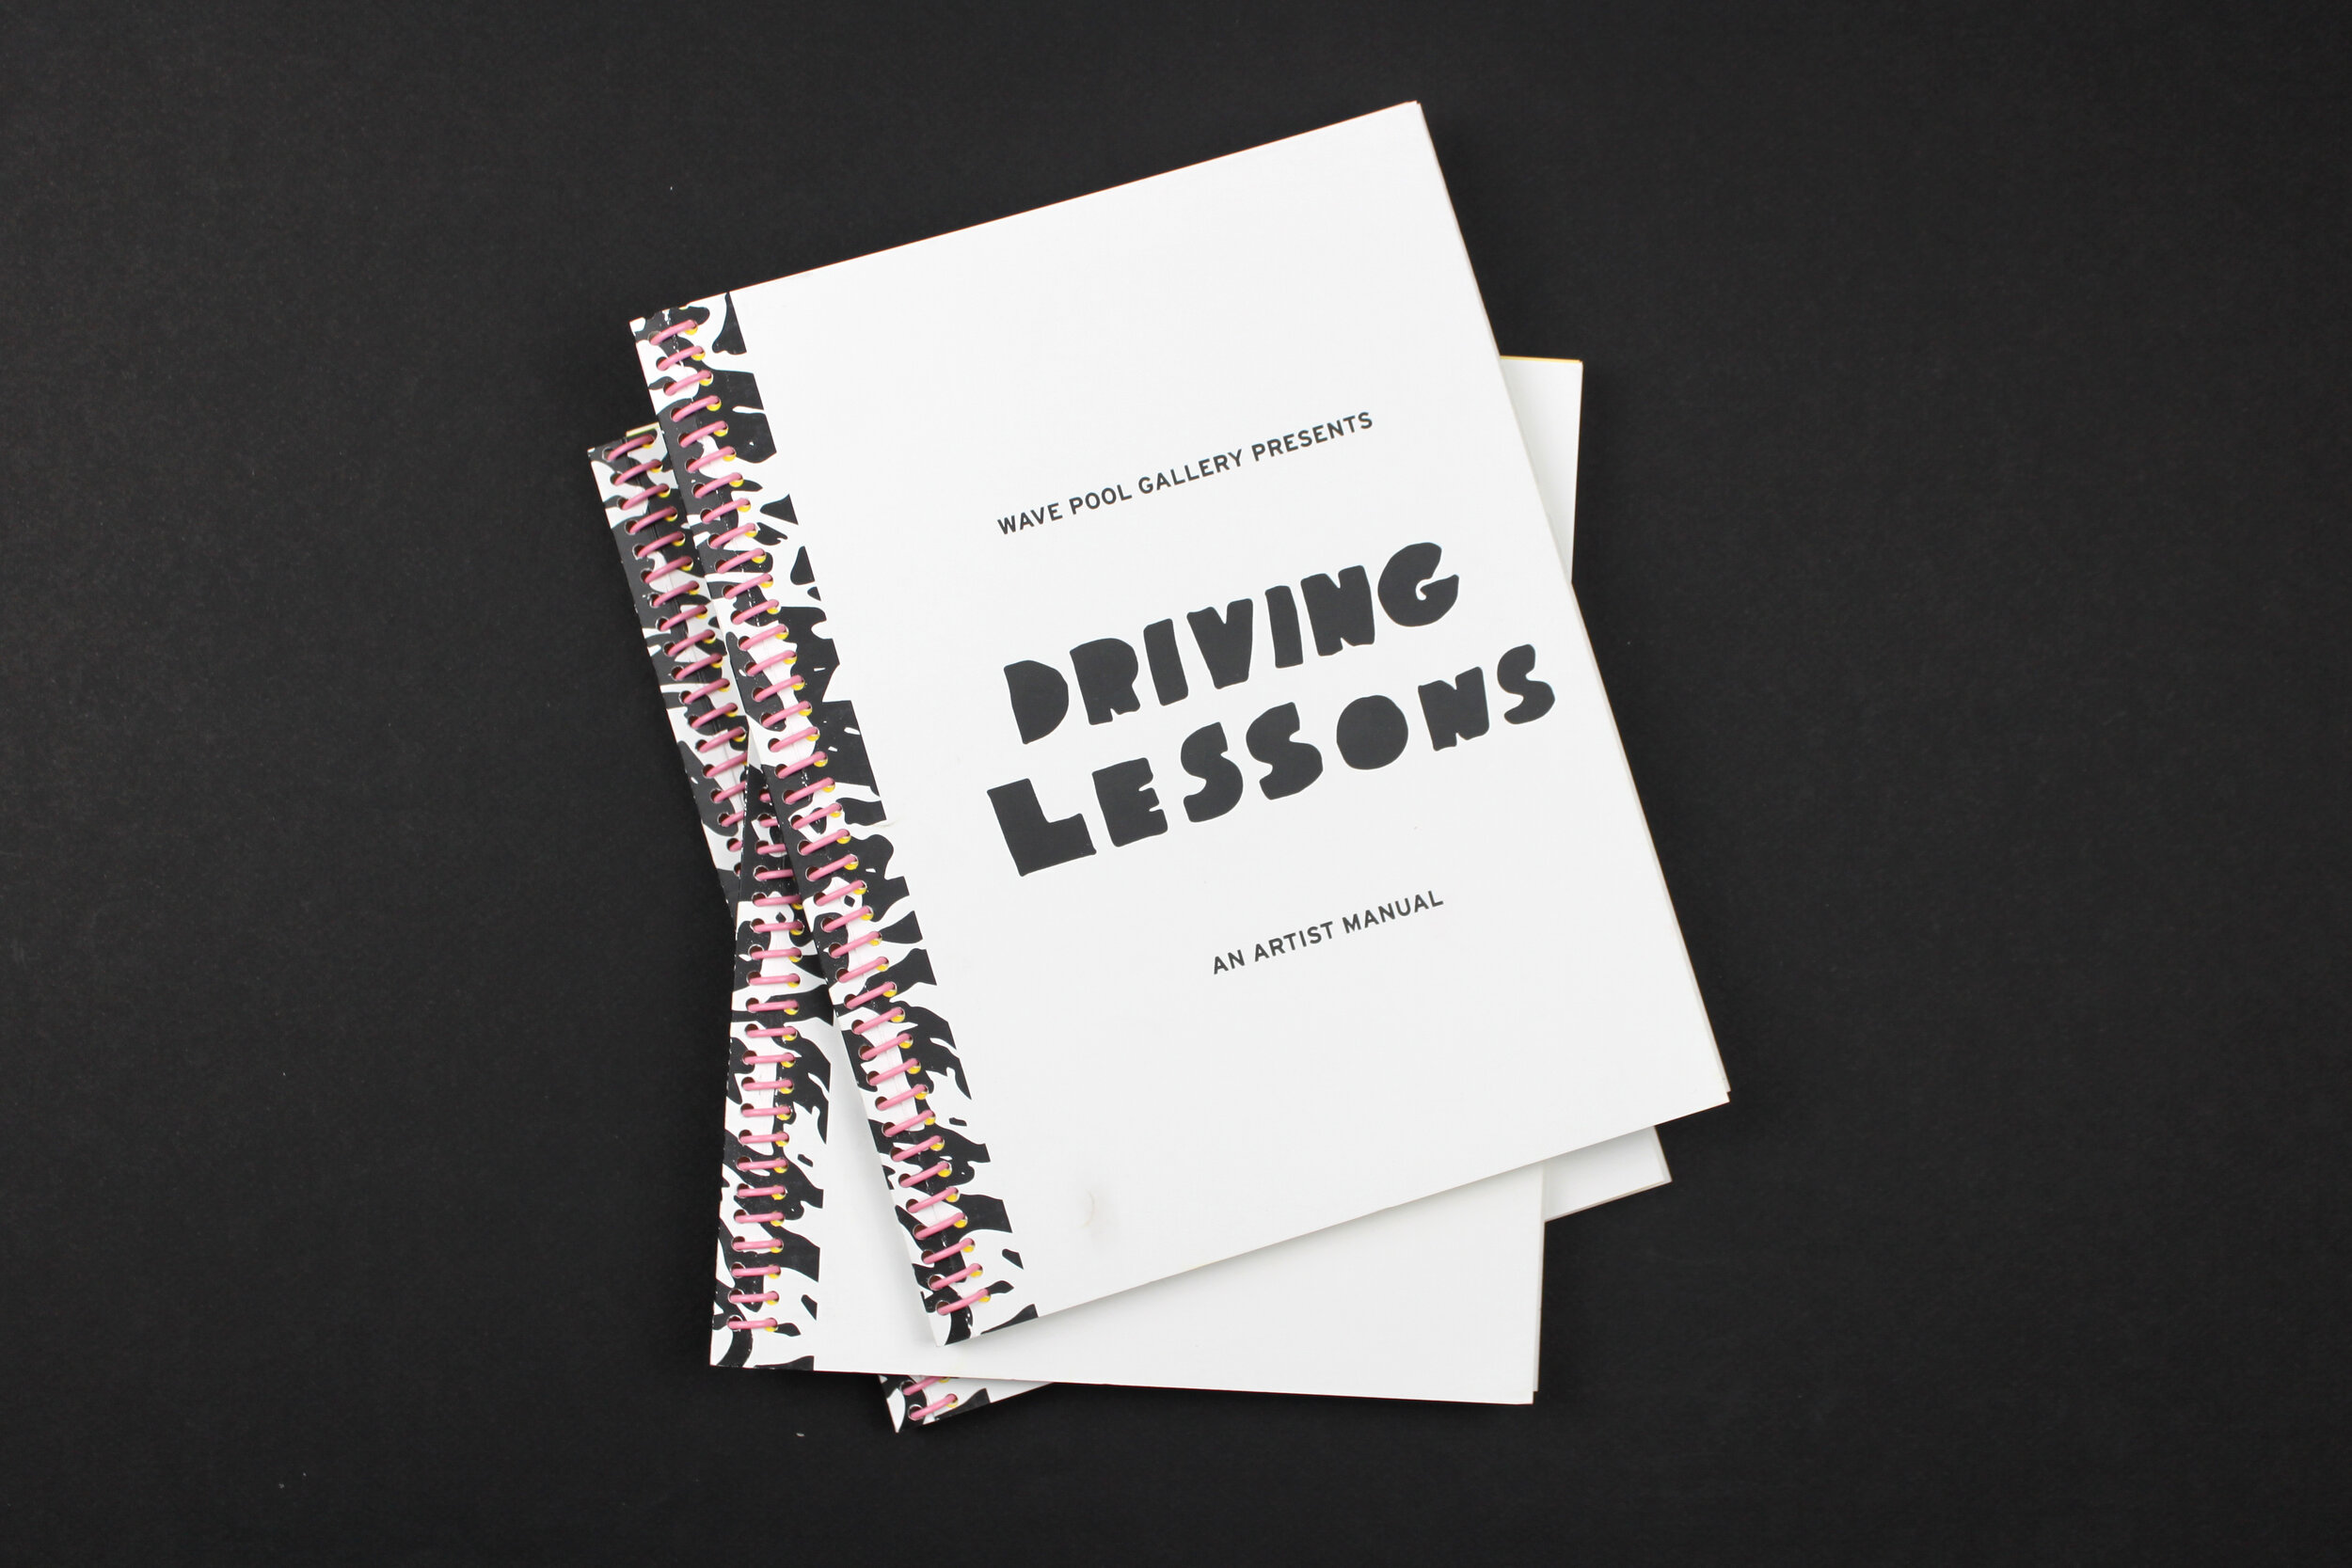 Driving Lessons 01.jpg